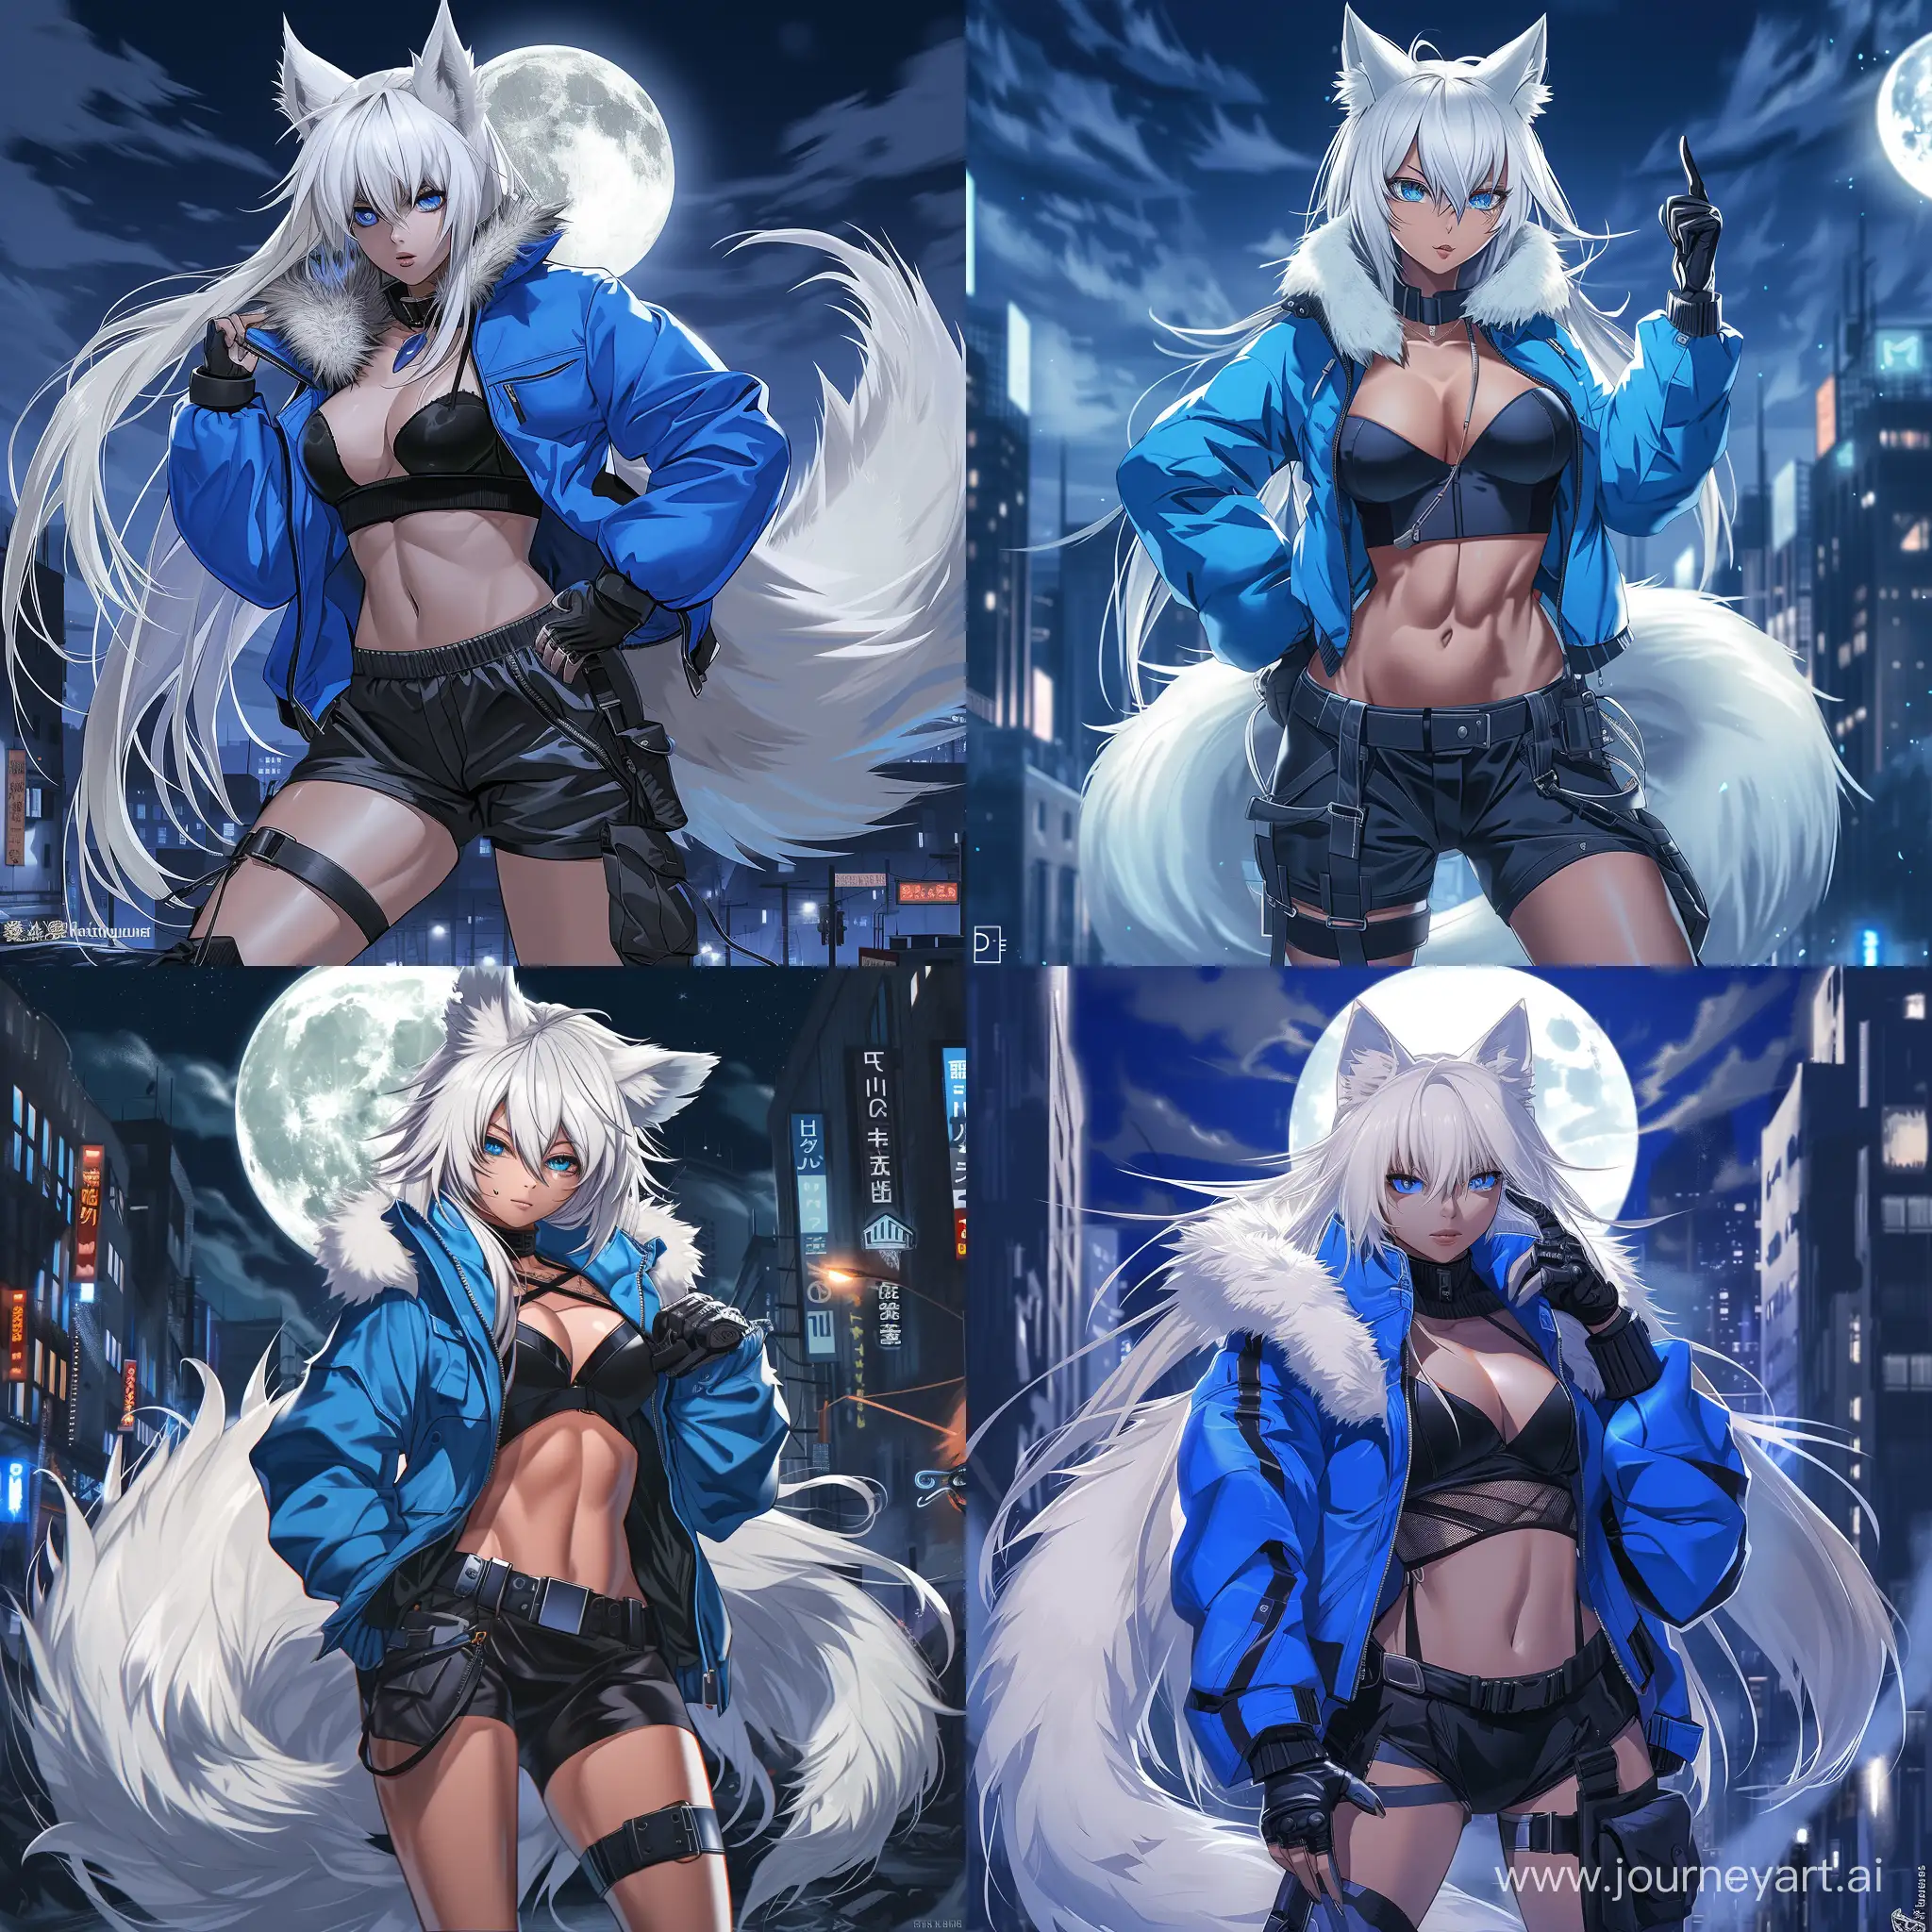 Fierce-White-Fox-Woman-in-AnimeStyle-Cityscape-at-Night